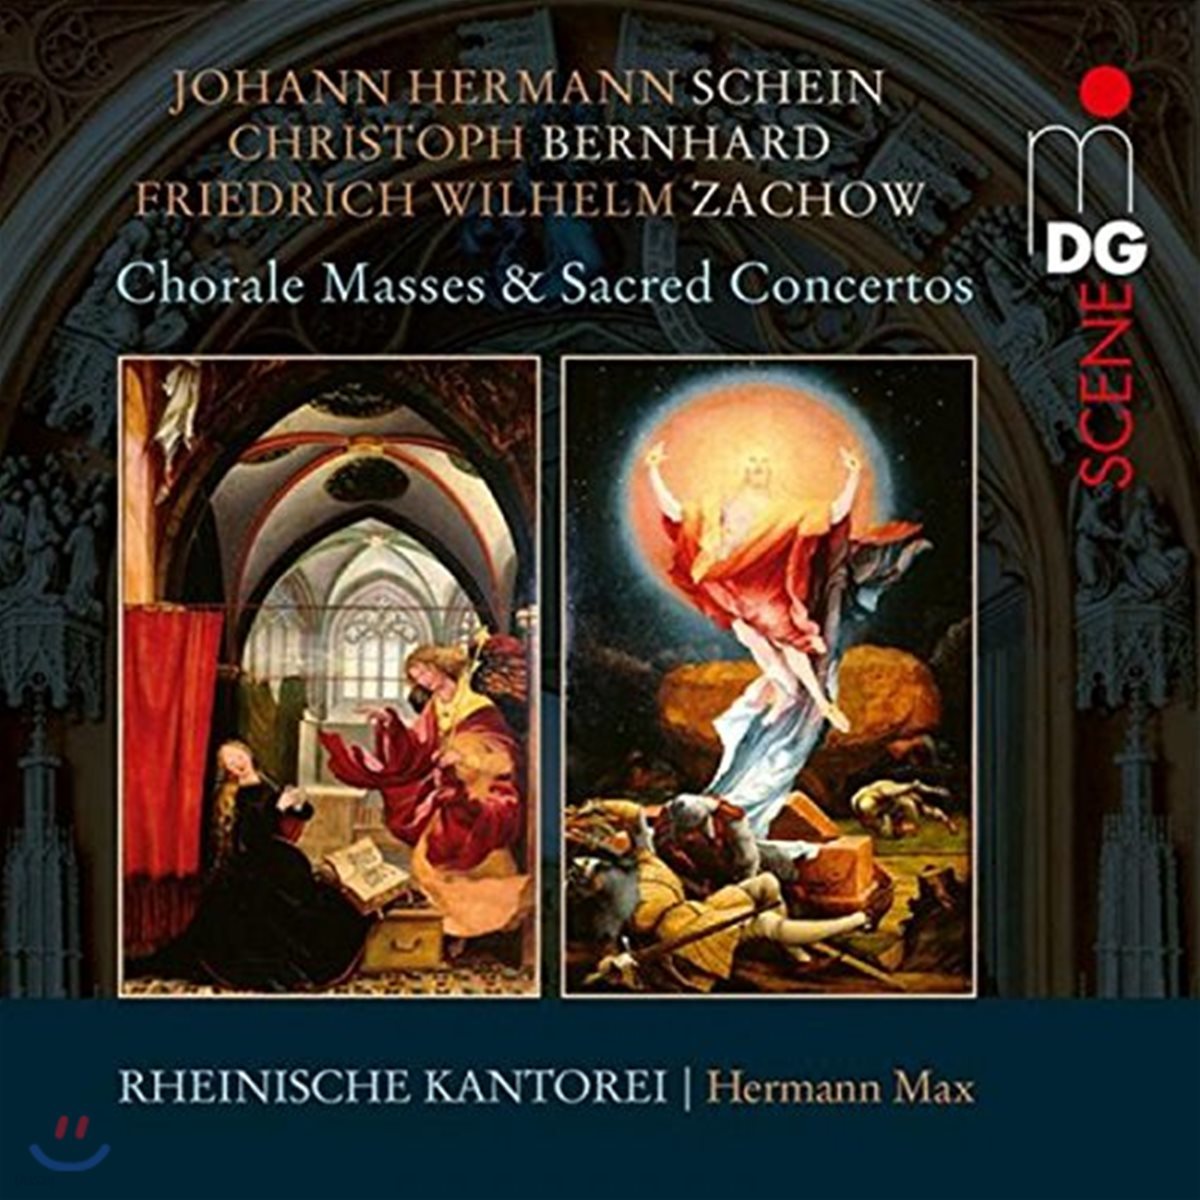 Rheinische Kantorei 샤인 / 베른하르트 / 차하우 / 피셔: 독일 바로크 합창 & 미사곡 모음집 (Chorale Masses & Sacred Concertos)